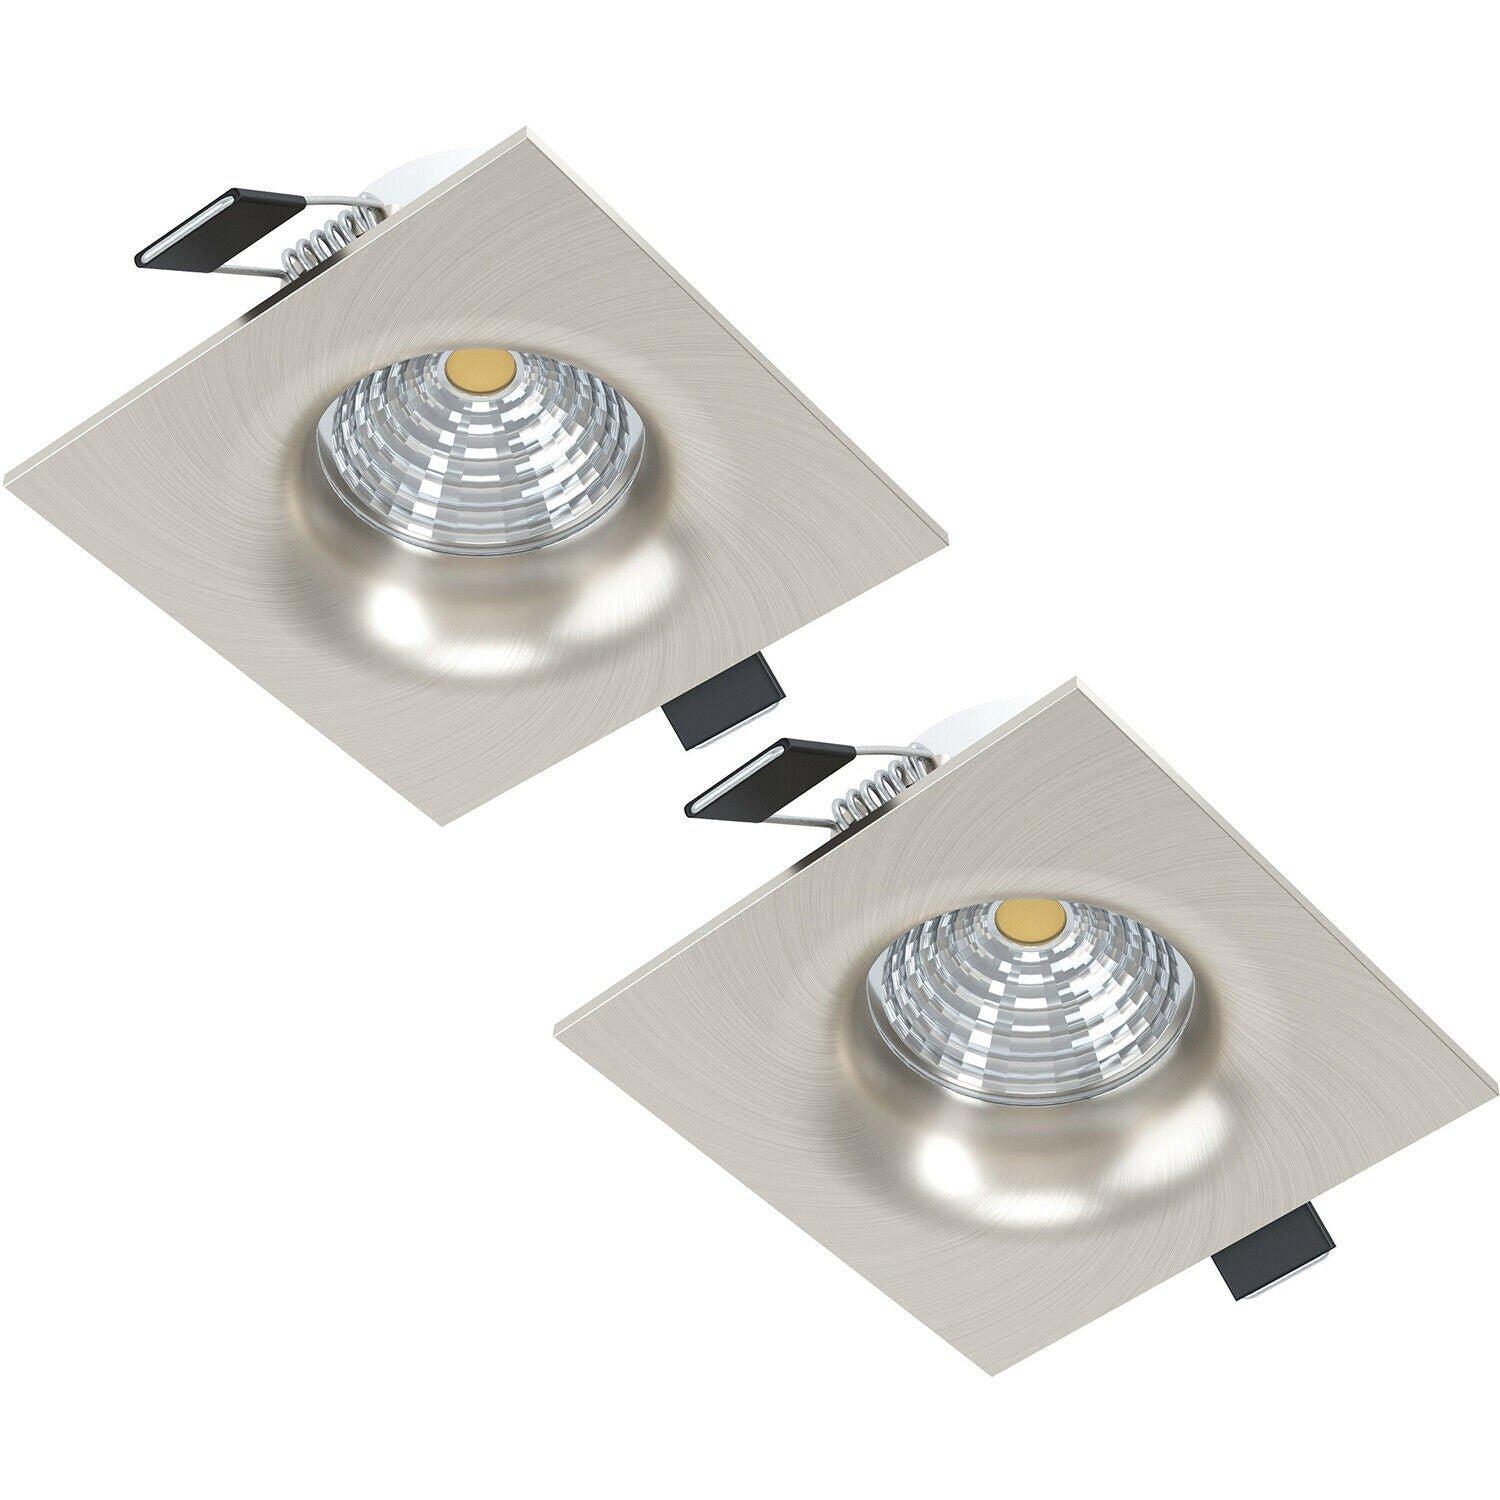 2 PACK Wall / Ceiling Flush Square Downlight Satin Nickel Spotlight 6W LED